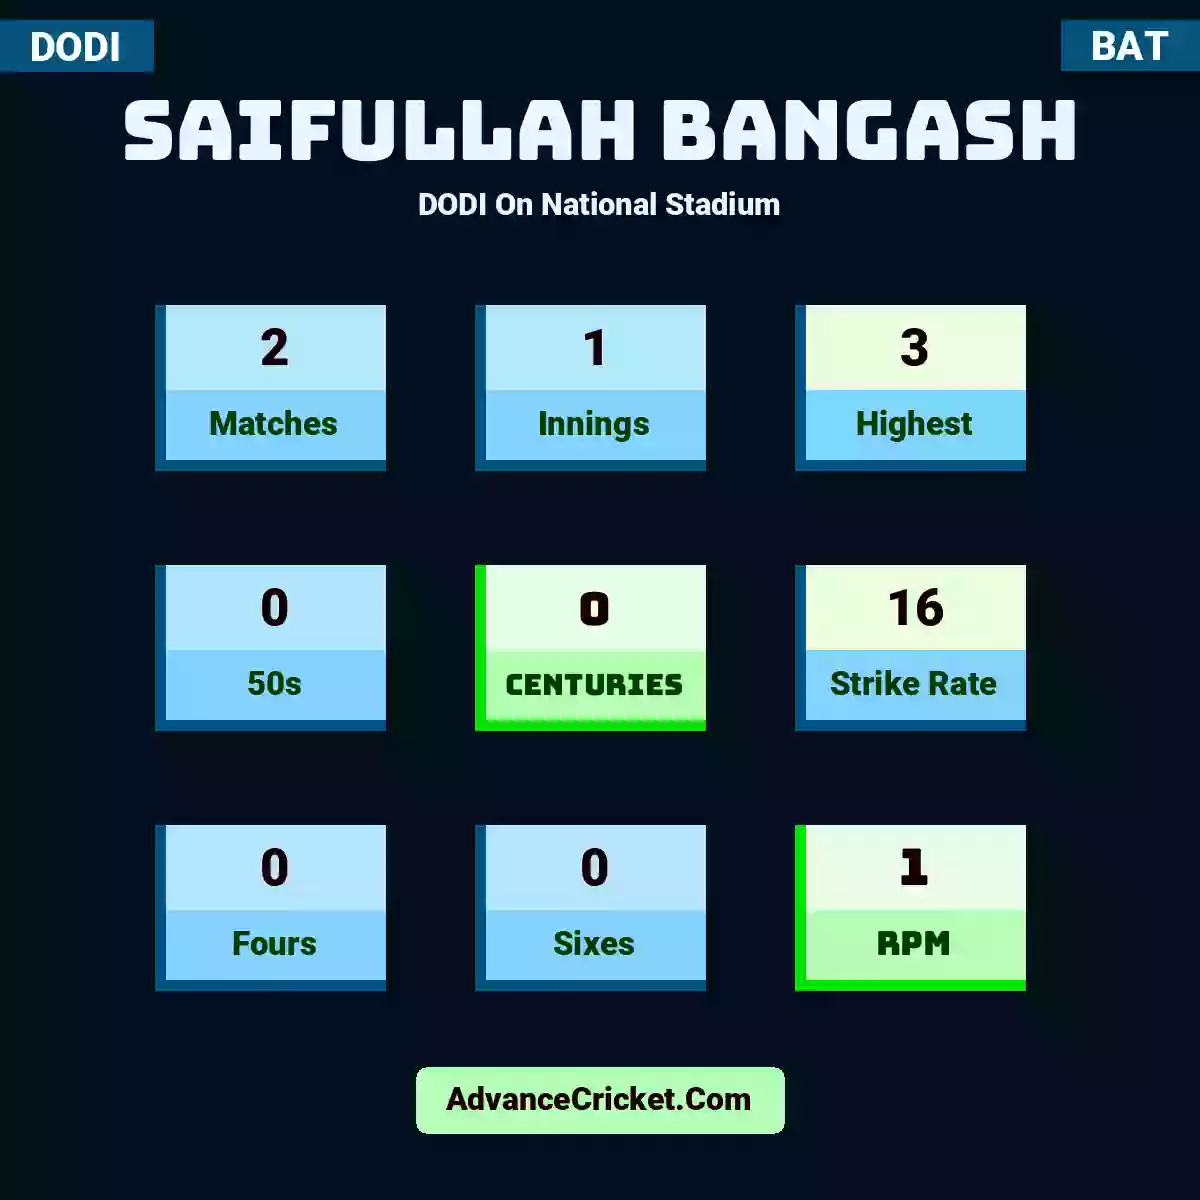 Saifullah Bangash DODI  On National Stadium, Saifullah Bangash played 2 matches, scored 3 runs as highest, 0 half-centuries, and 0 centuries, with a strike rate of 16. S.Bangash hit 0 fours and 0 sixes, with an RPM of 1.